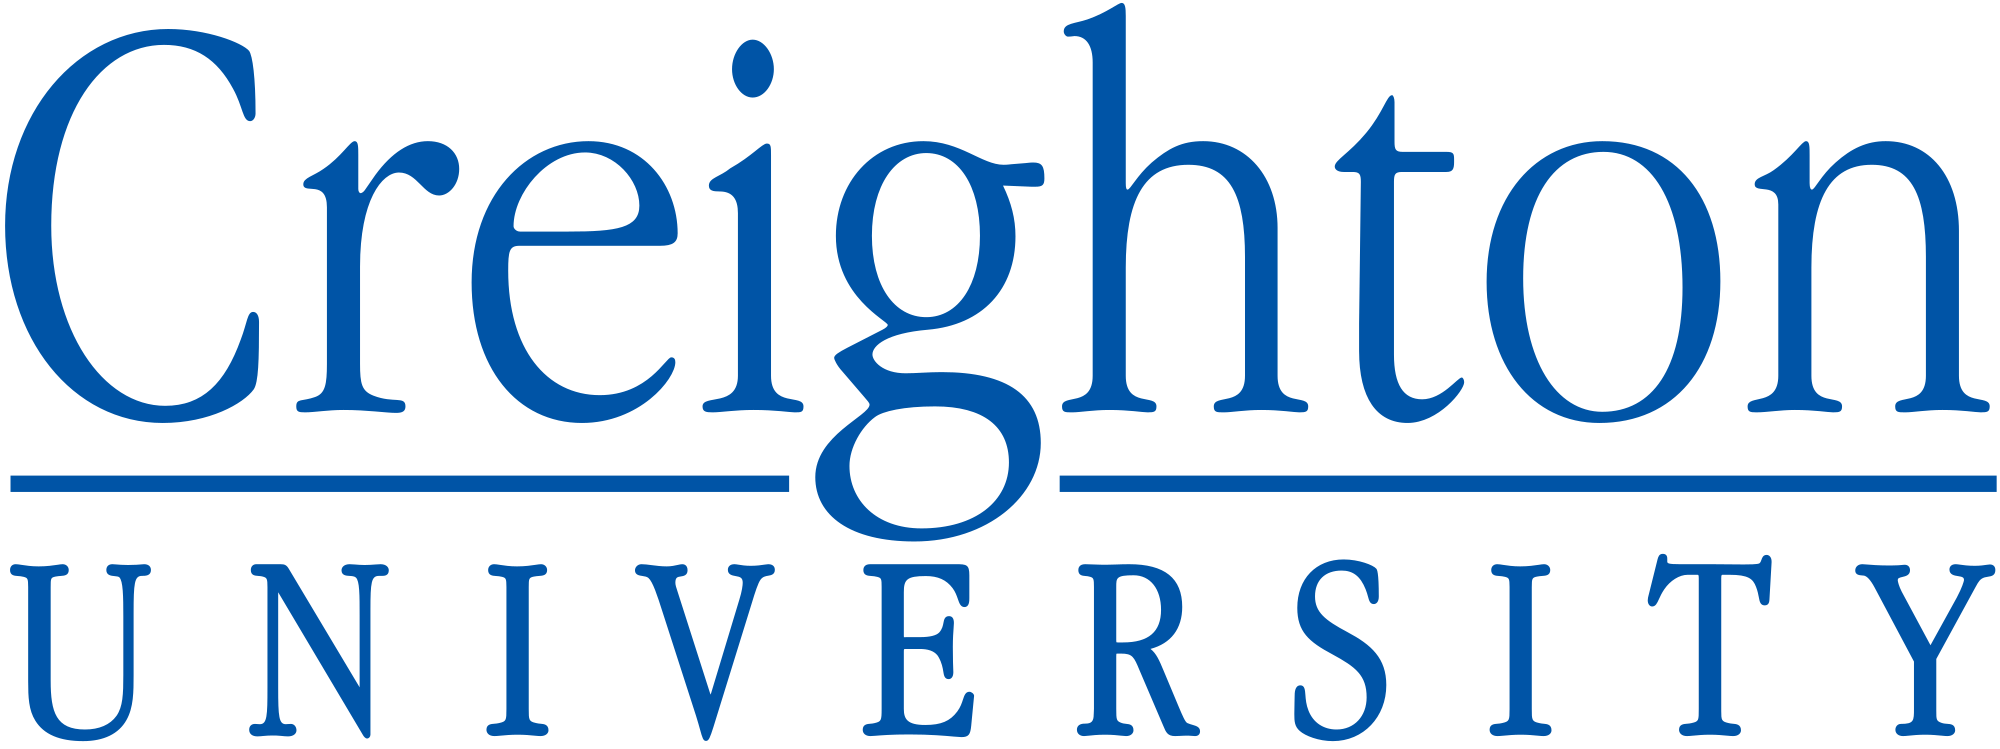 Creighton Logo - Creighton University logo.svg